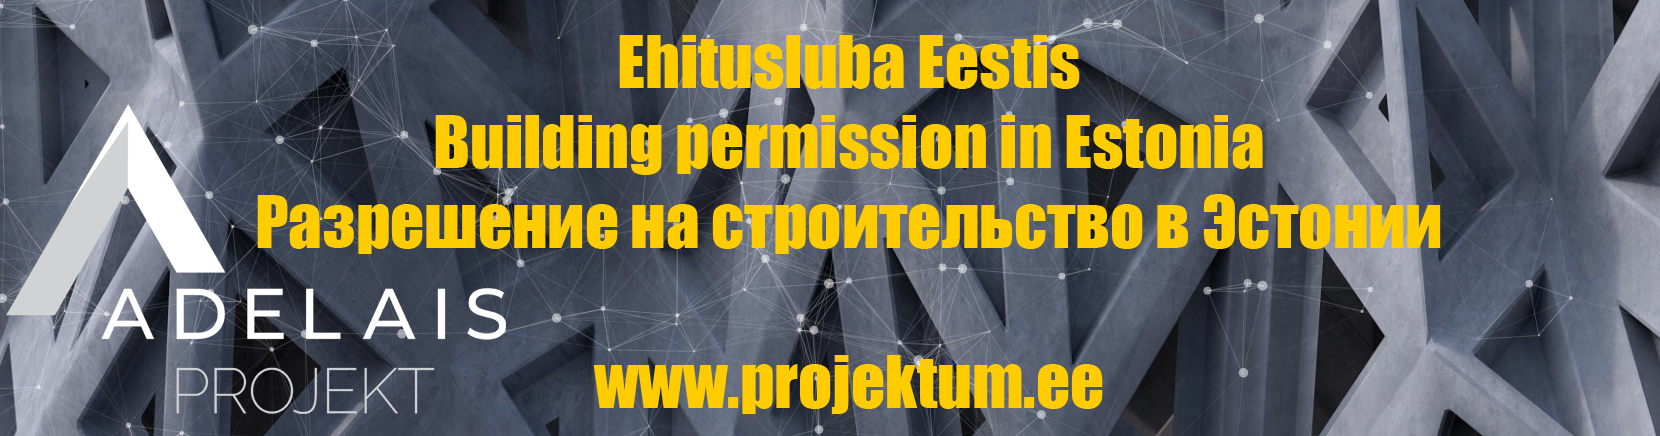 Ehitusluba Eestis Building permission in Estonia Разрешение на строительство в Эстонии www.projektum.ee